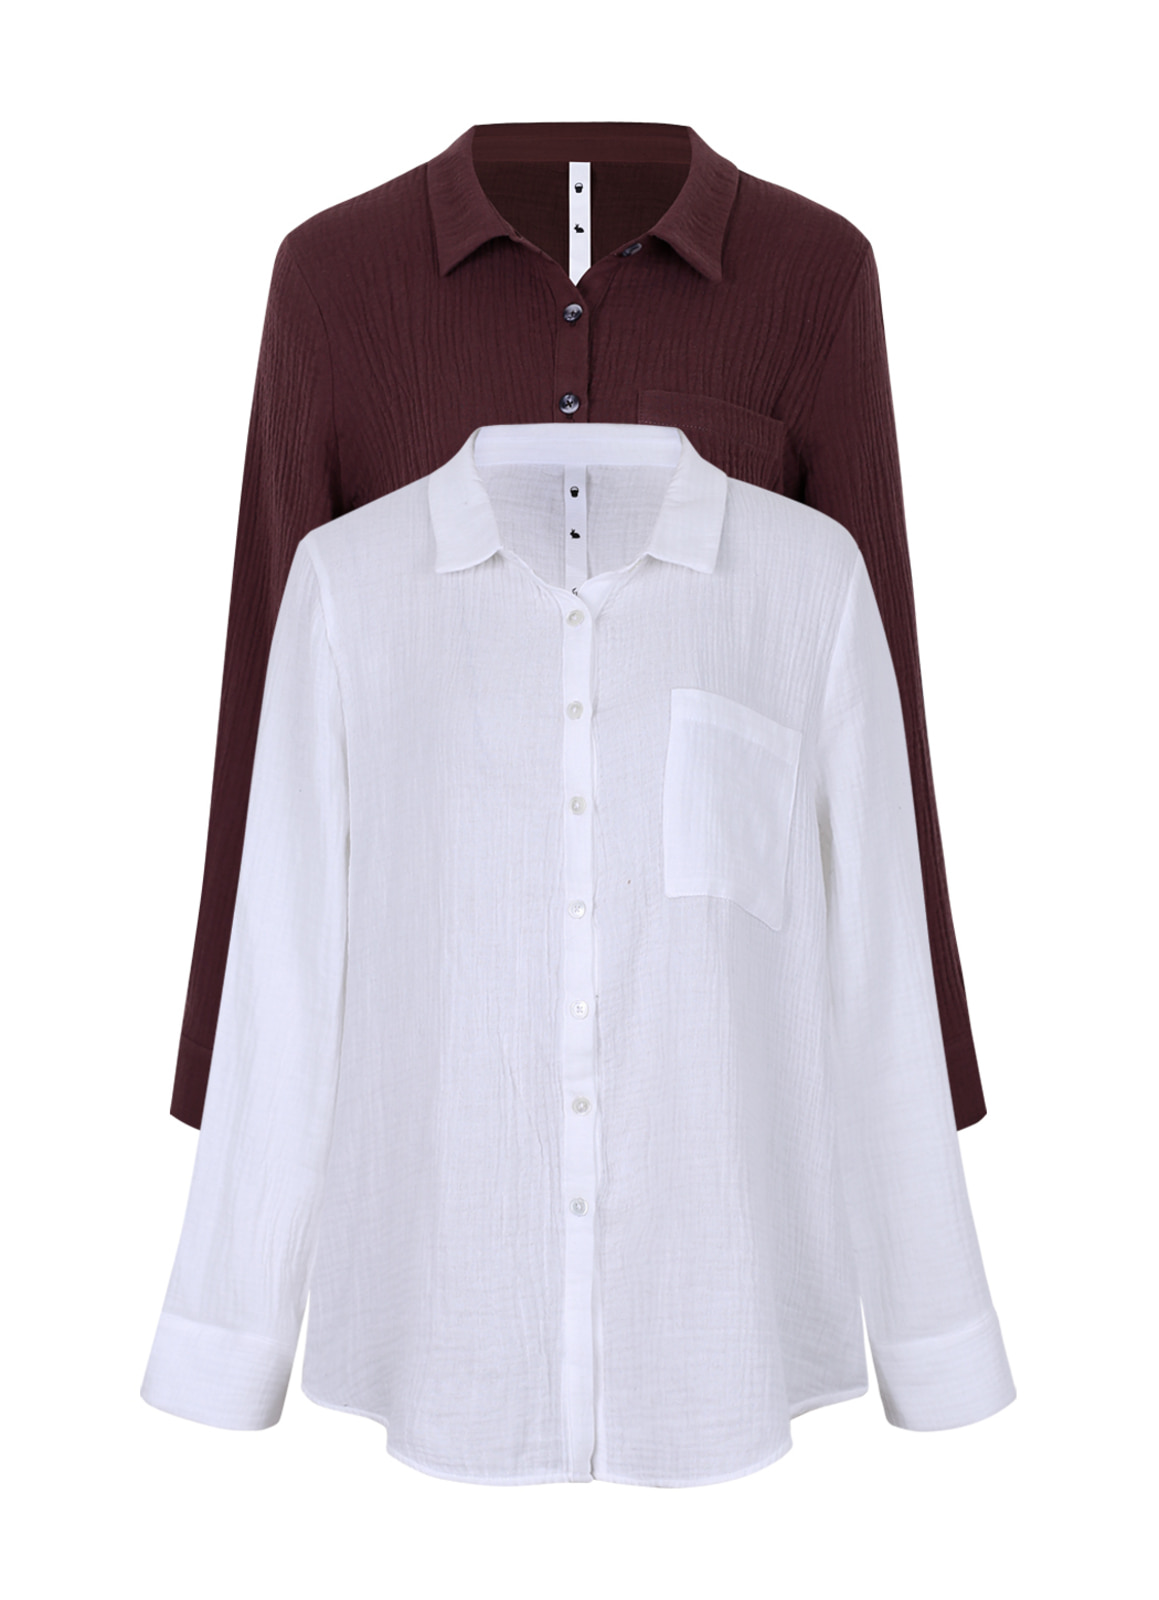  W.Double gauze shirts  White/Brown [59,000 -&gt; 29,000]